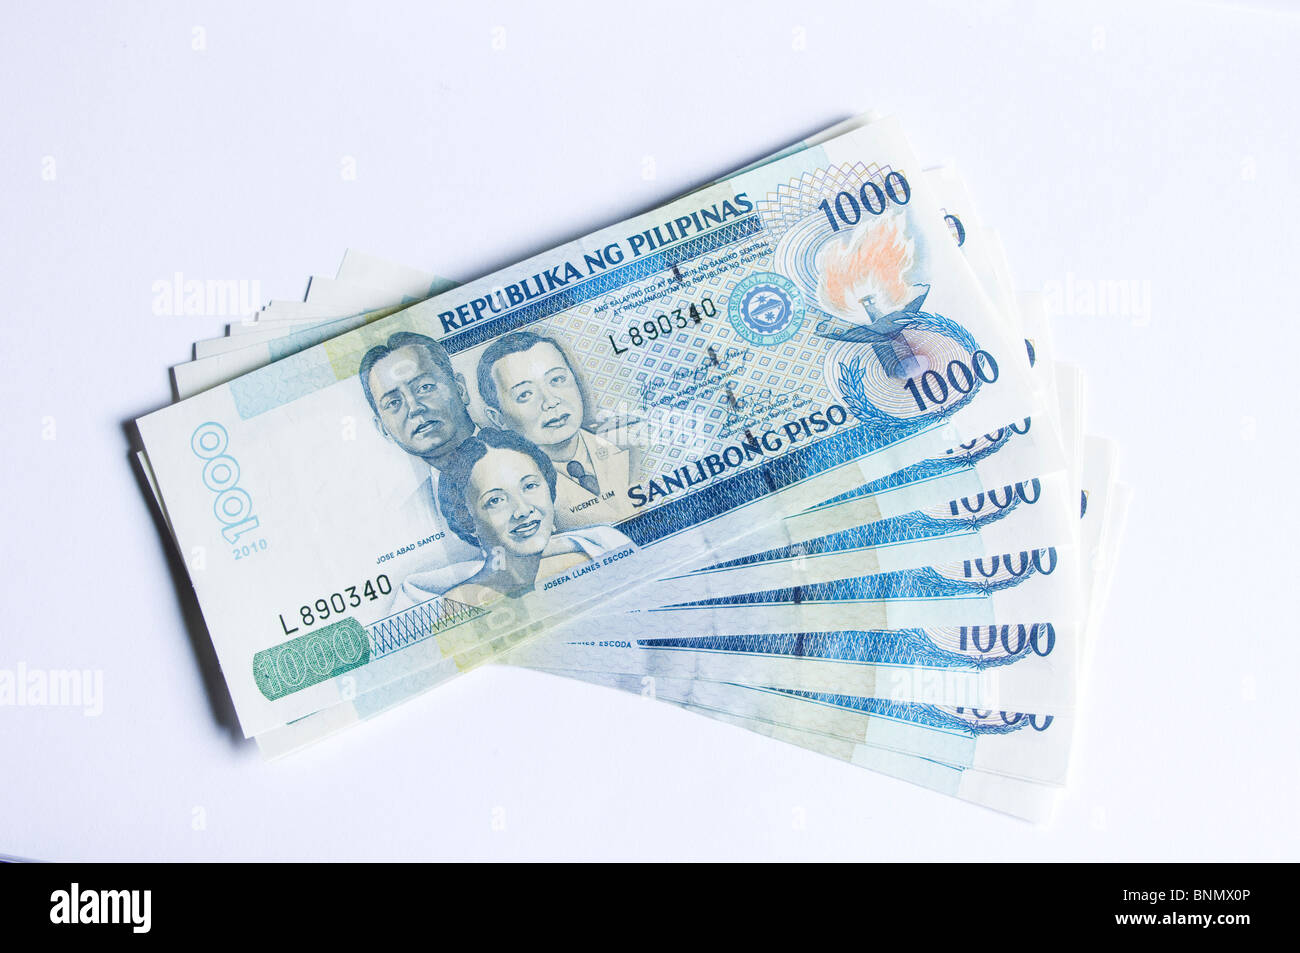 Filippine pesos, asia valuta Foto Stock